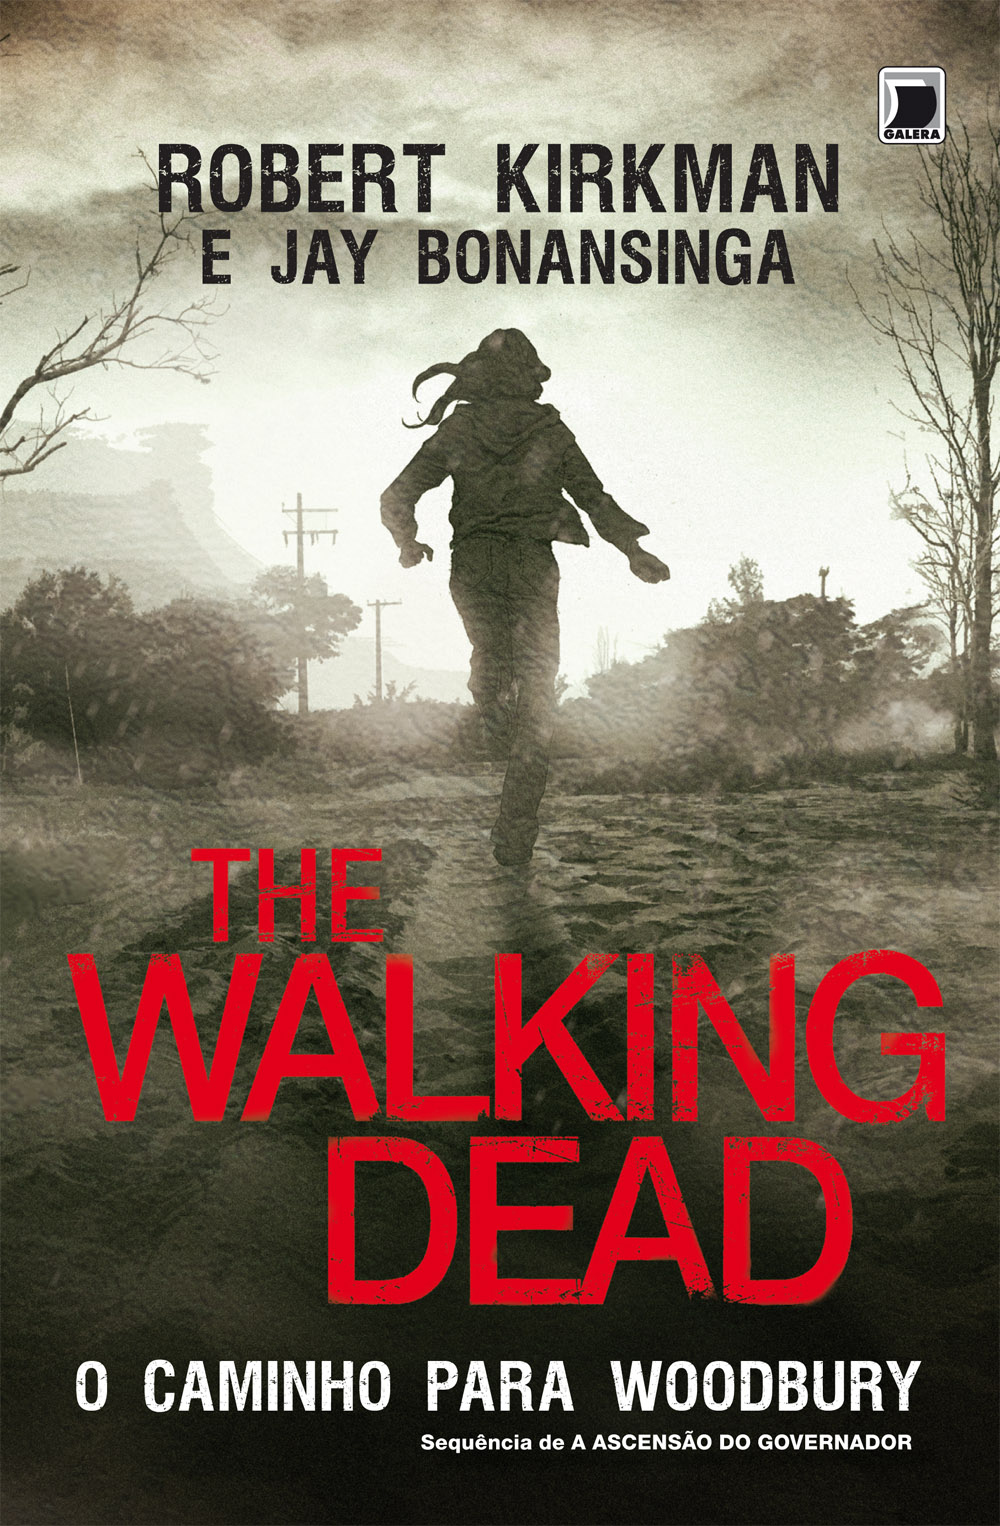 Download O Caminho Para Woodbury The Walking Dead Vol. 2 Robert Kirkman